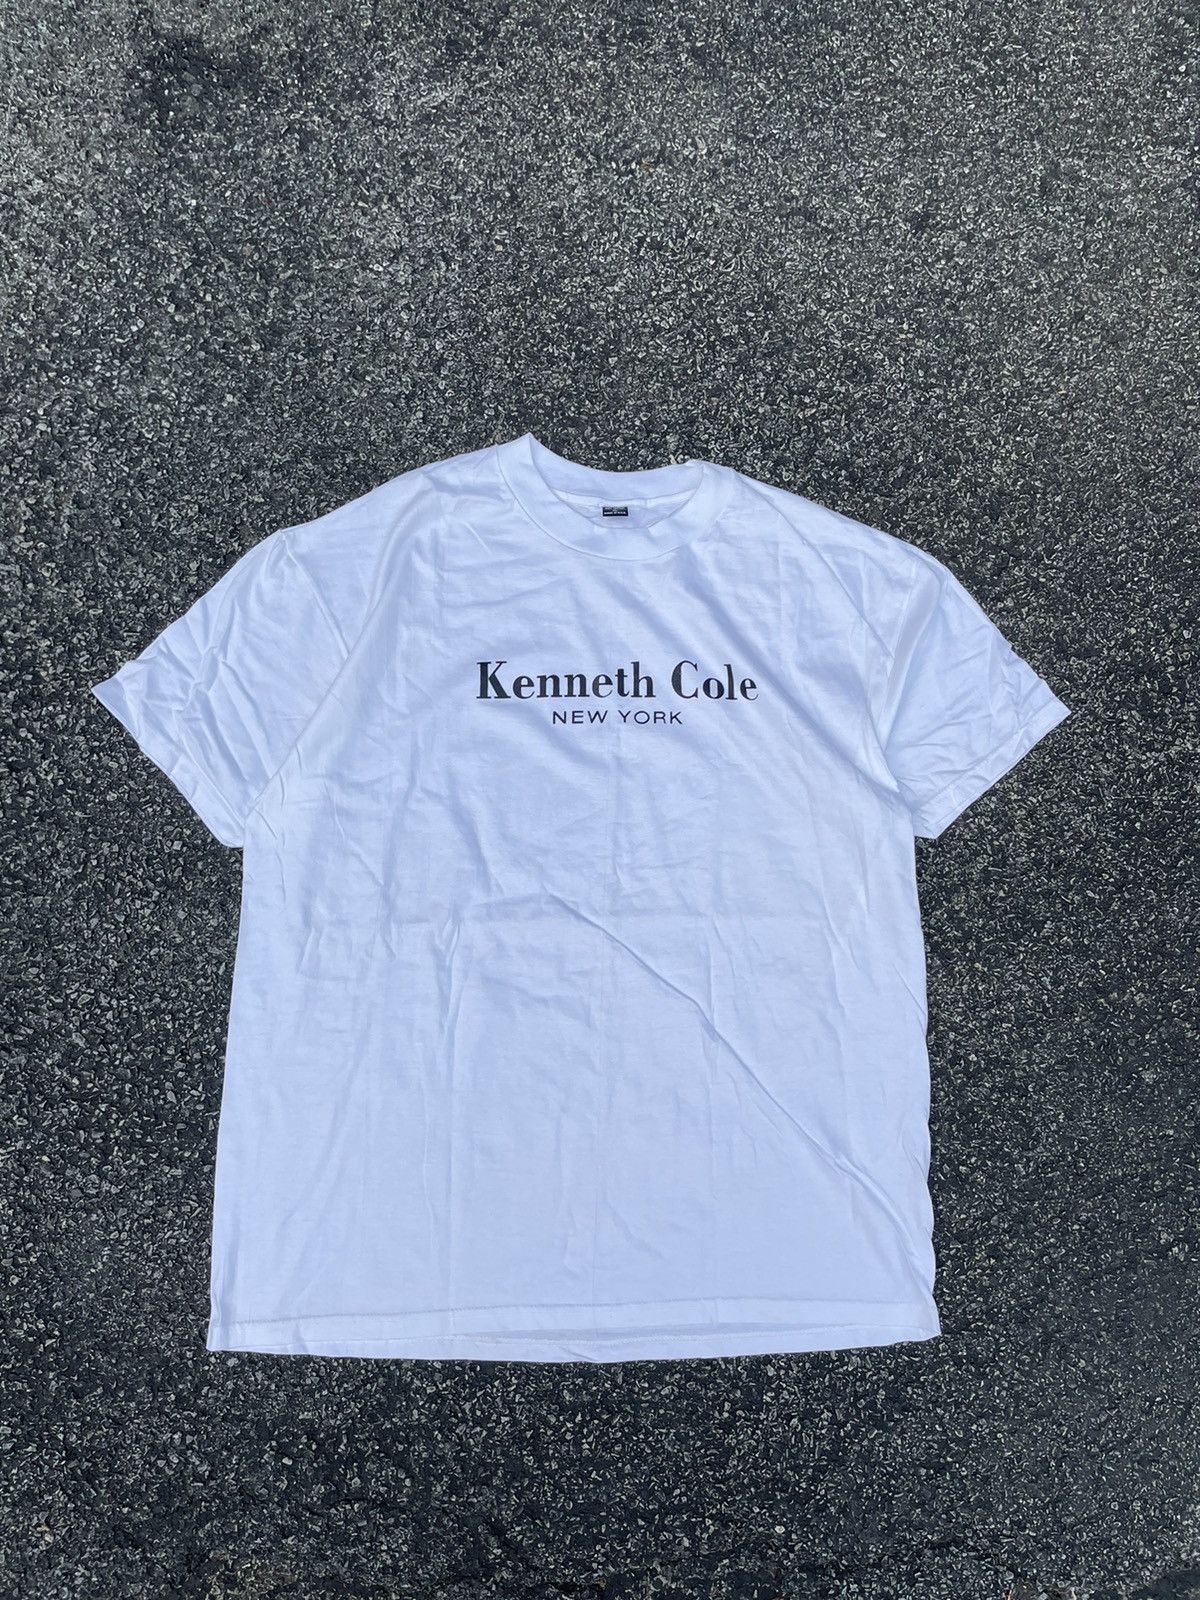 Vintage Vintage Kenneth Cole New York t shirt Size US XL / EU 56 / 4 - 1 Preview